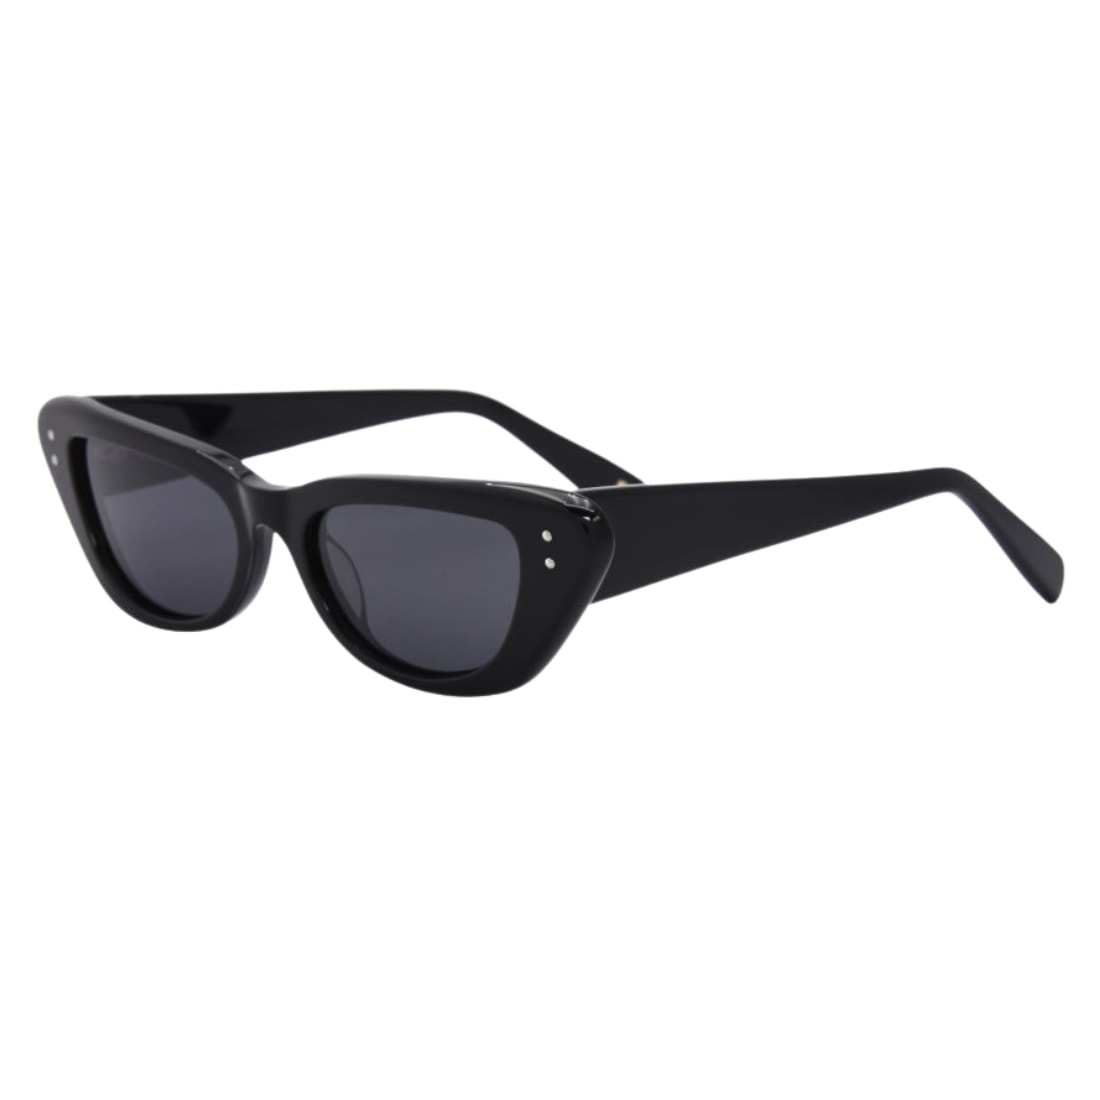 I-Sea Astrid Sunglasses - Black/Smoke Polarised - Square/Rectangular Sunglasses by I-Sea